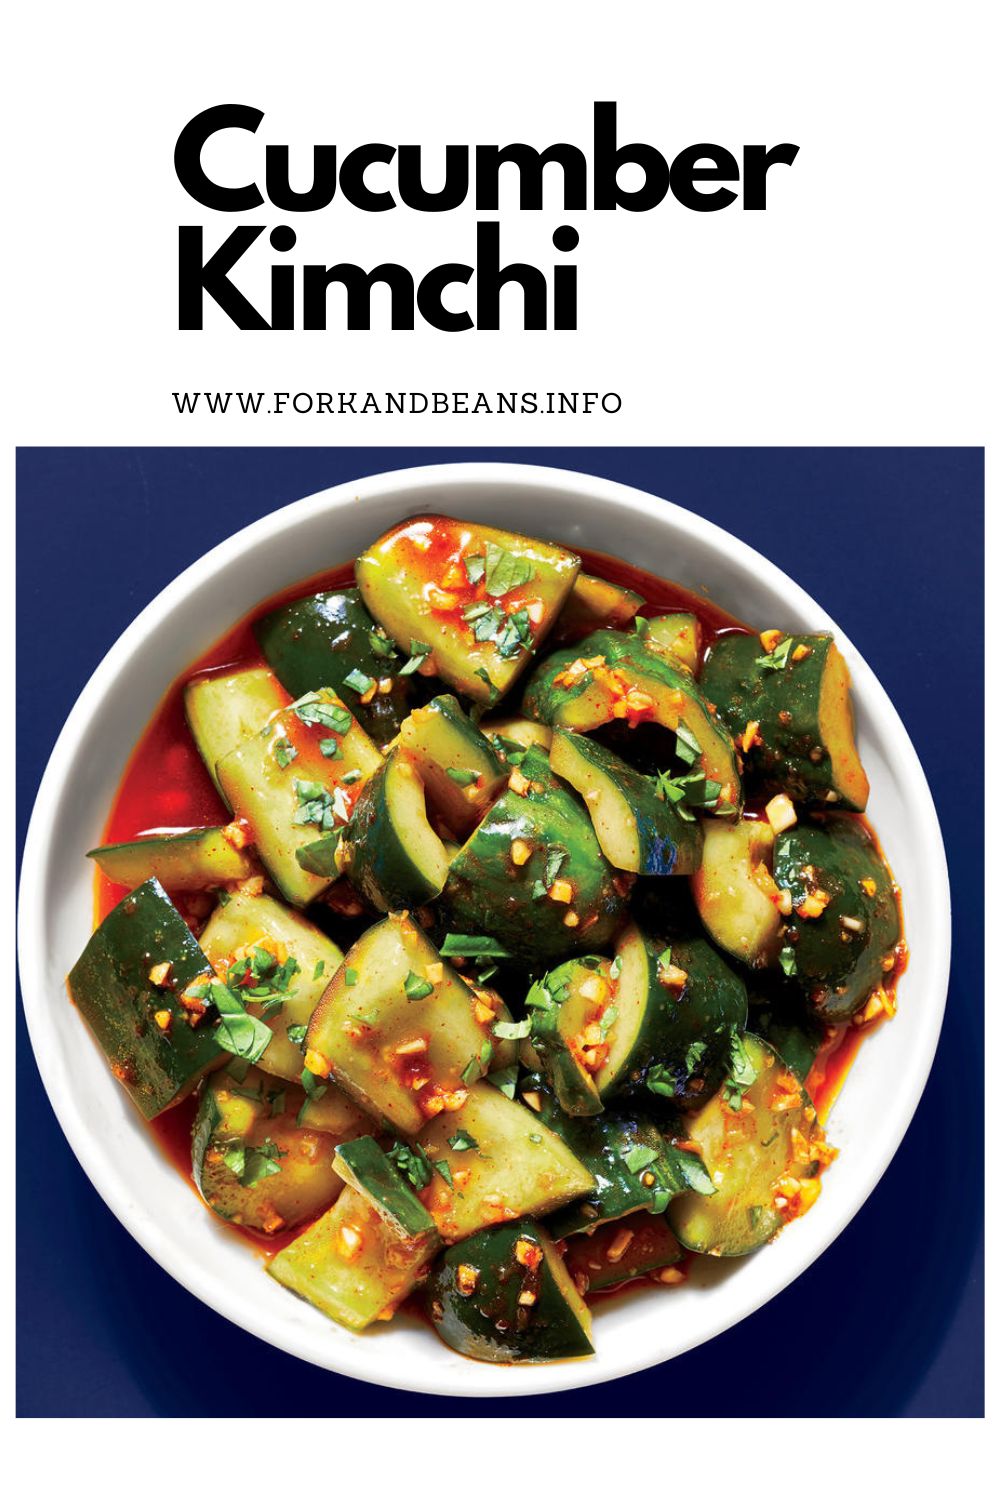 Spicy, Crunchy Cucumber Kimchi